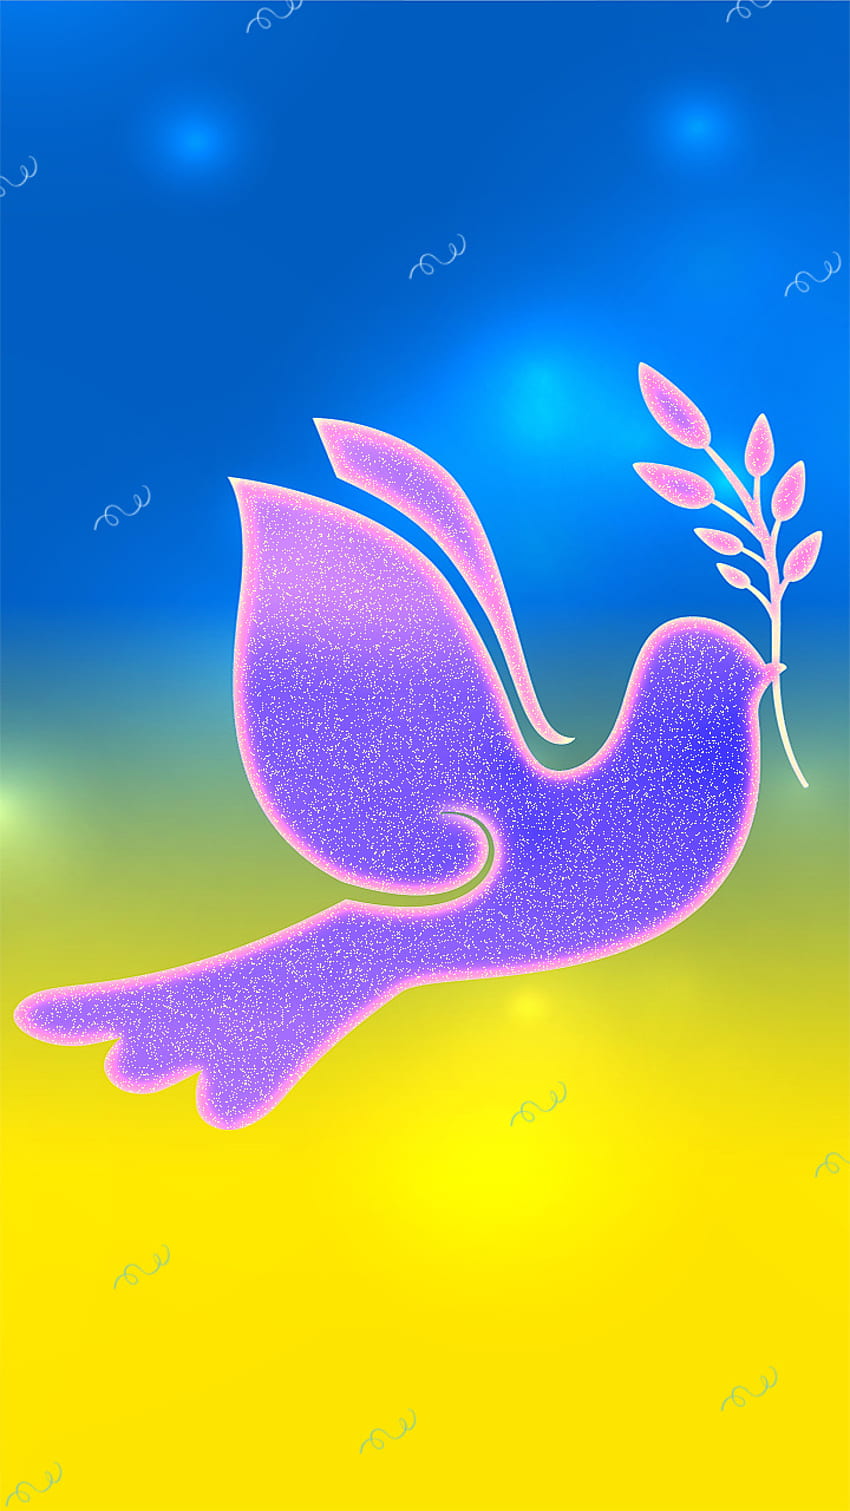 Ucrania quiere paz, bandera, apoyo a Ucrania, azul, paloma, pájaro, amarillo, stopwar fondo de pantalla del teléfono